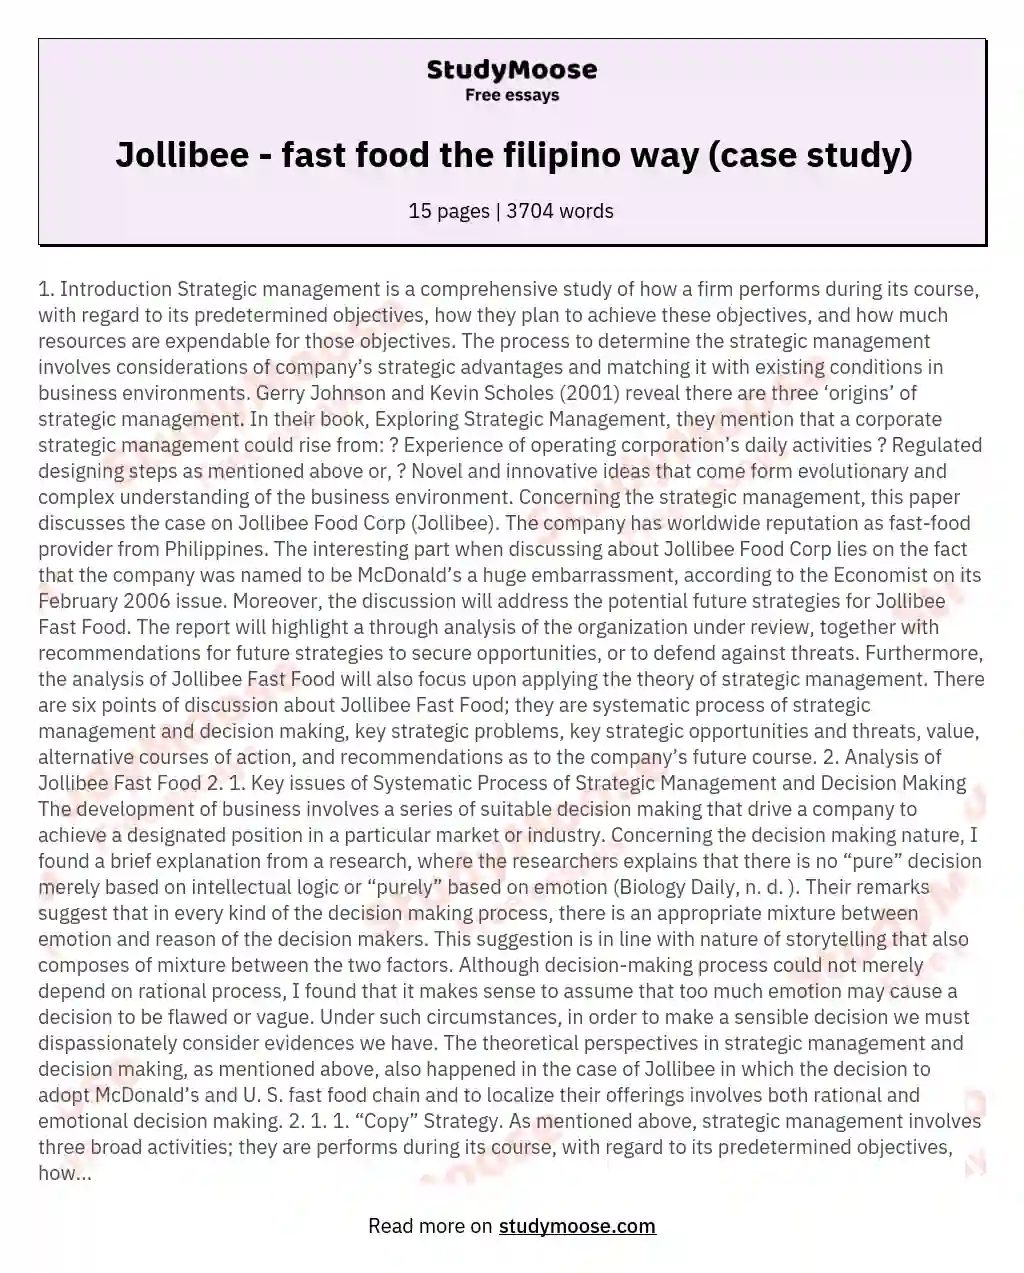 Jollibee - fast food the filipino way (case study) essay